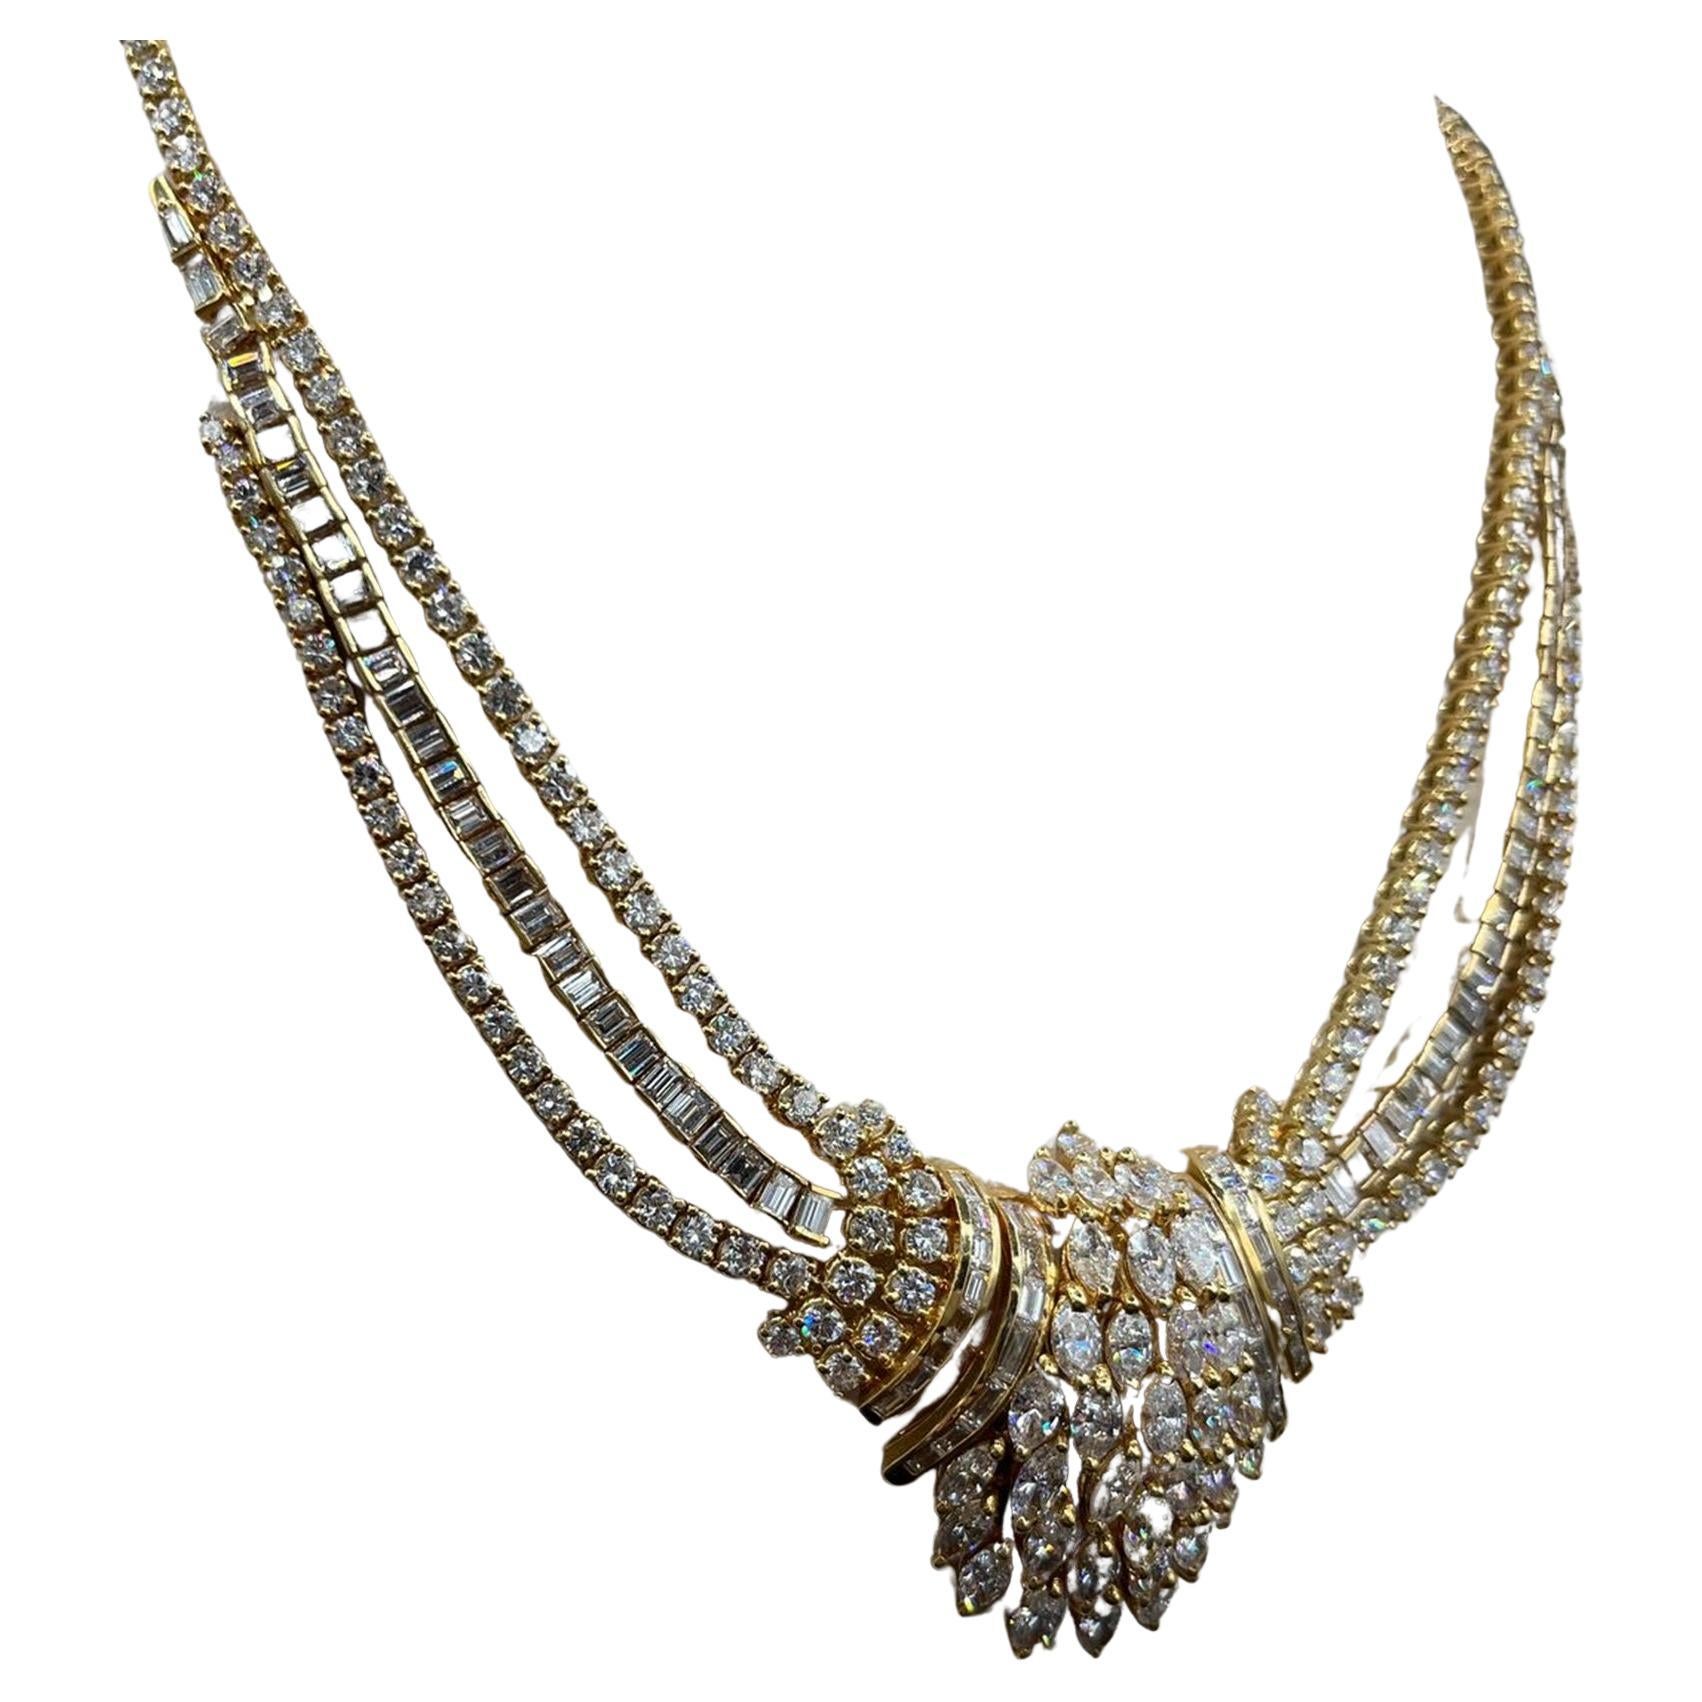 16 carat gold necklace